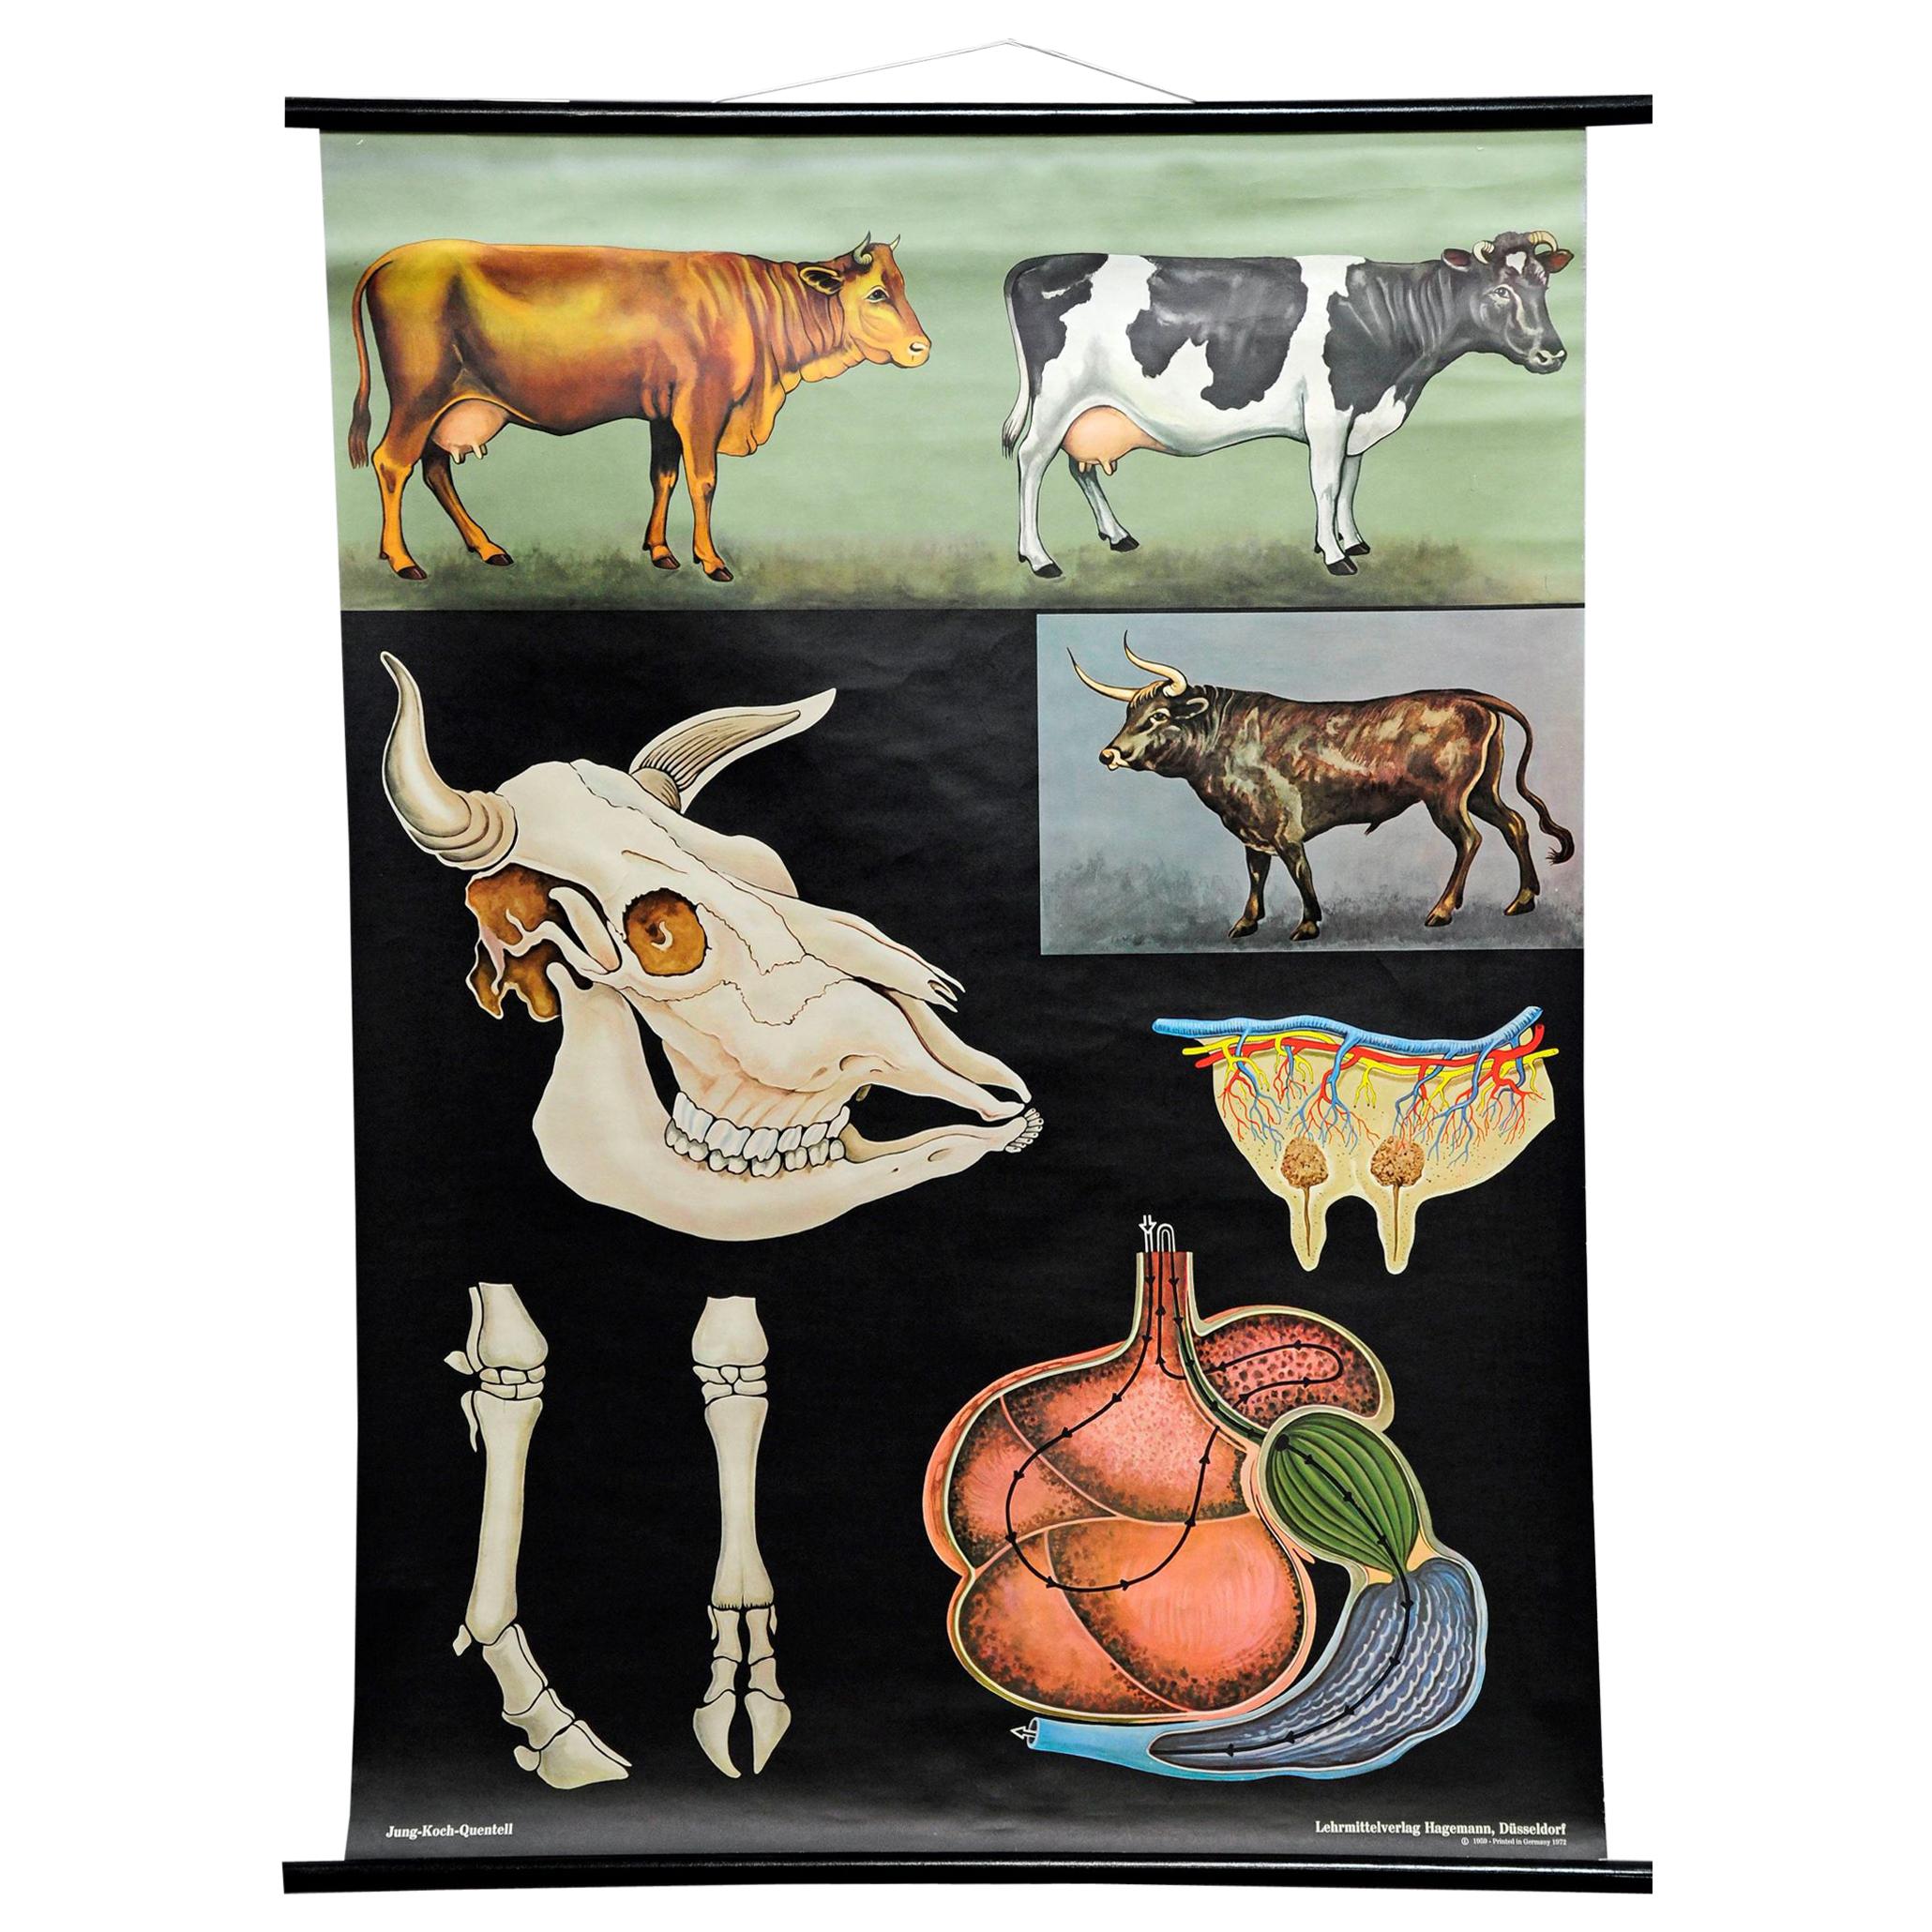 Cattle Cow Anatomy Jung Koch Quentell Art Print Vintage Mural Wall Chart Poster